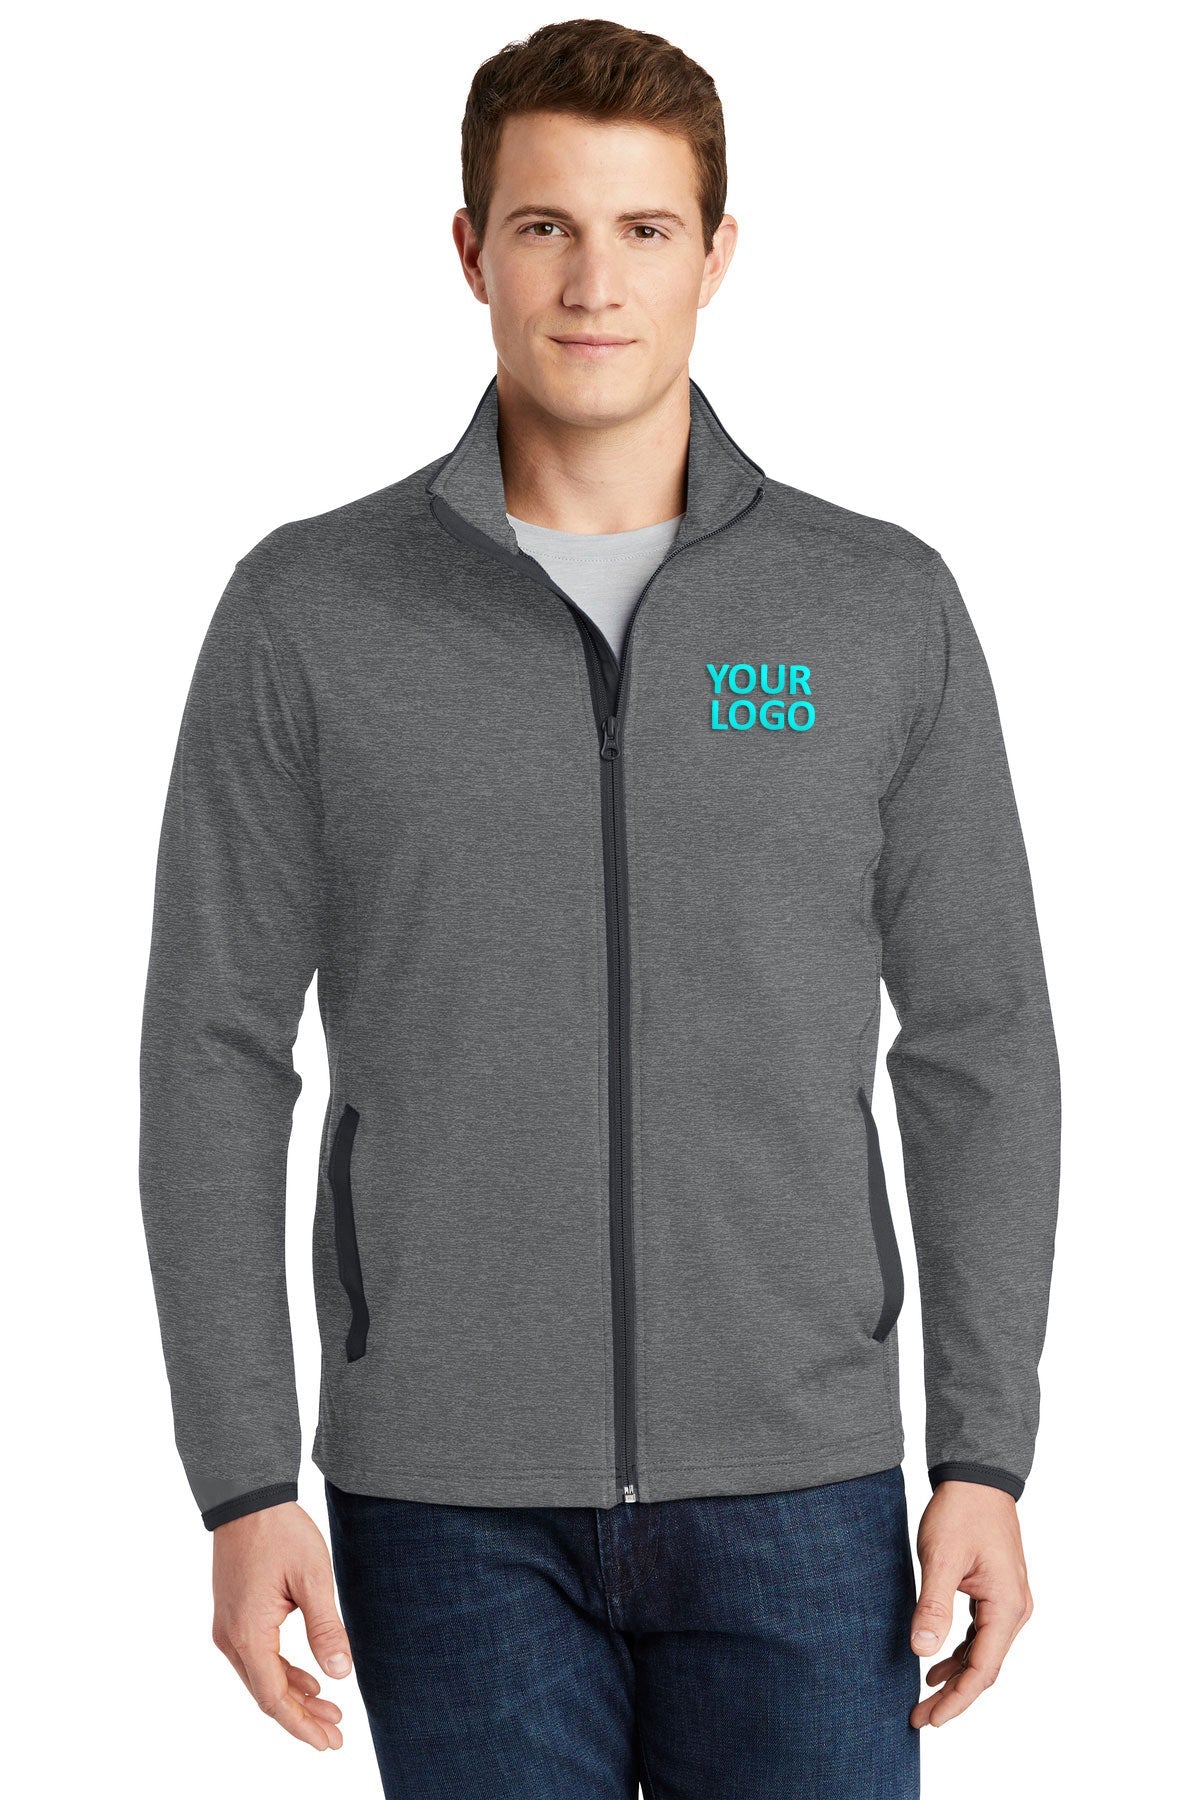 Sport-Tek Charcoal Grey Heather/ Charcoal Grey ST853 sweatshirts with company logo